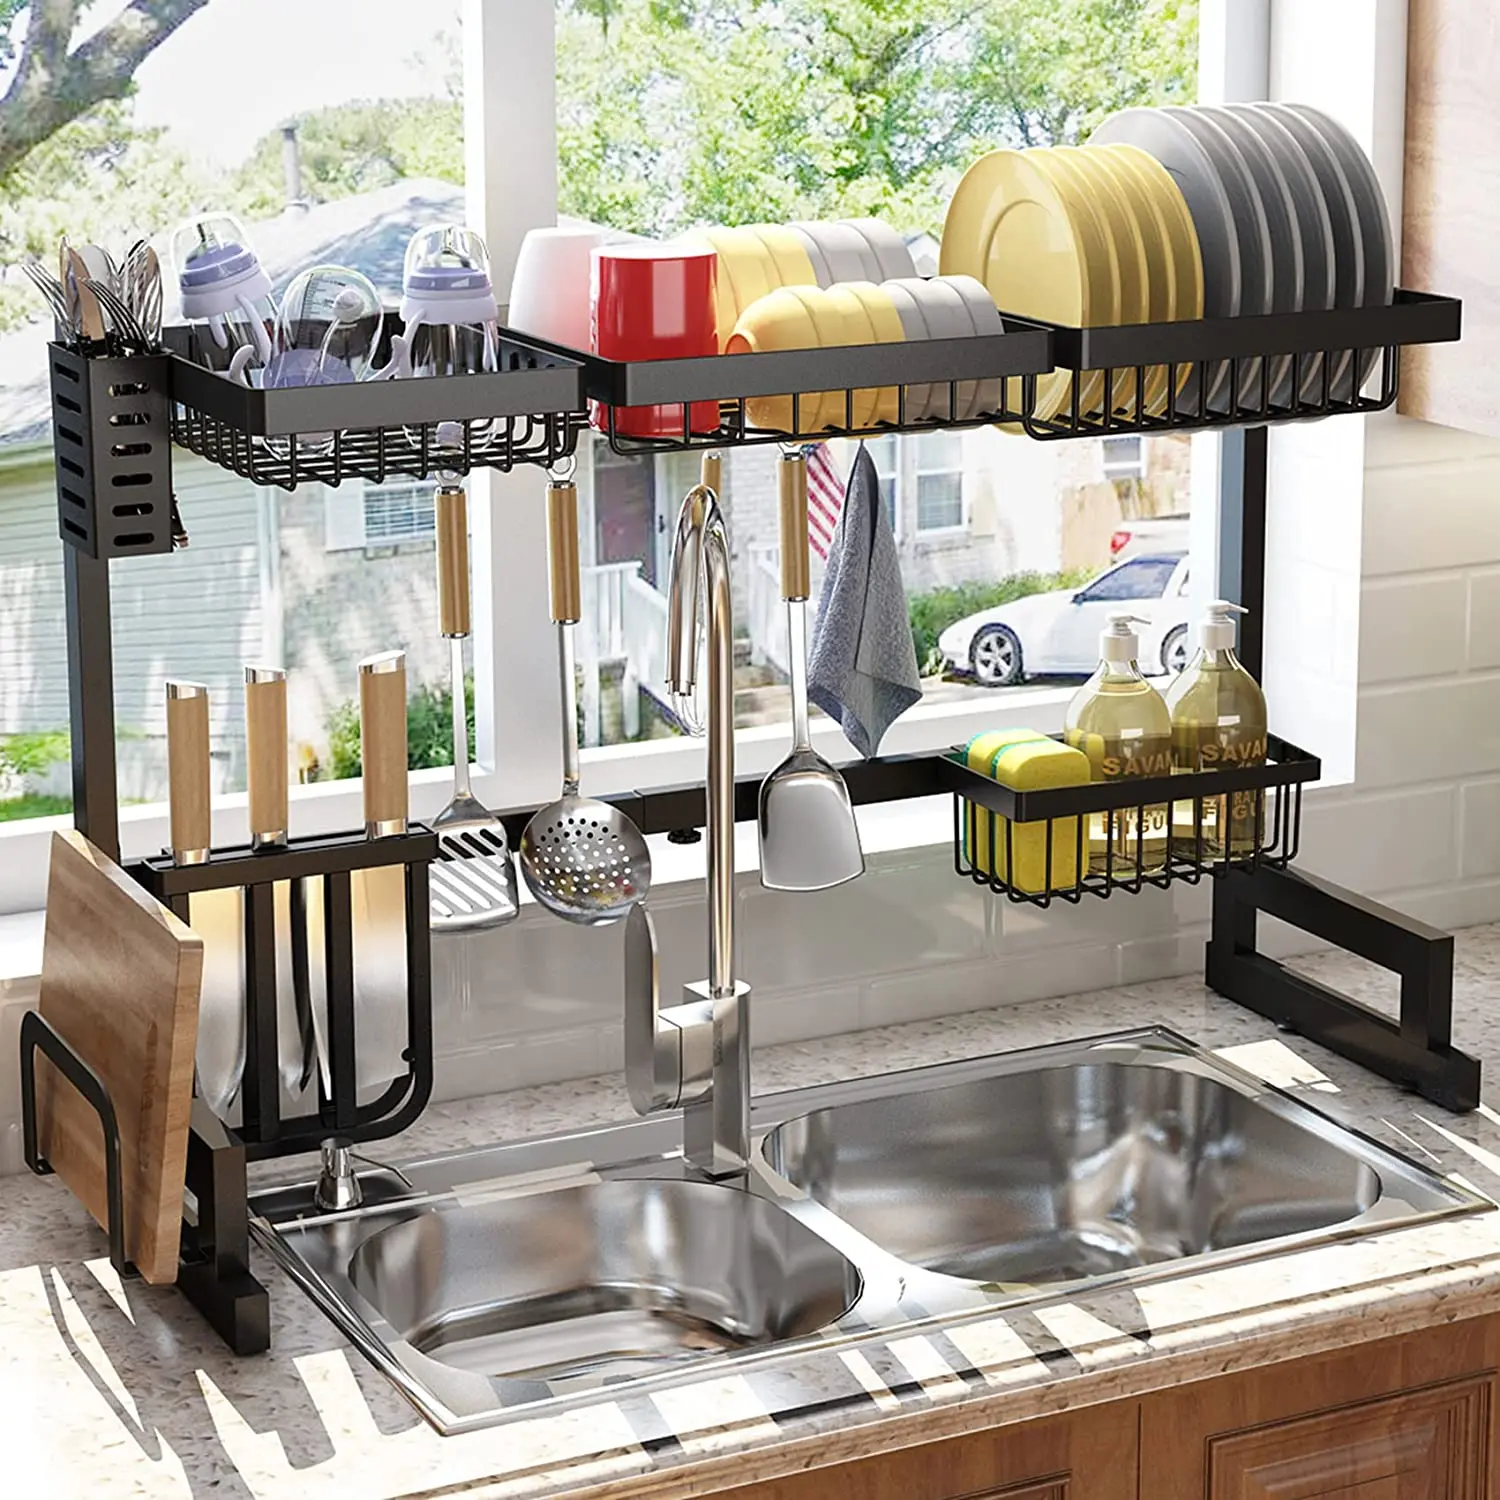 https://ae01.alicdn.com/kf/S1323330f1d38464697260c0d29a93b25o/2-Tier-Over-The-Sink-Dish-Drying-Rack-Width-Adjustable-Dish-Rack-with-Utensil-Holder-Kitchen.jpg